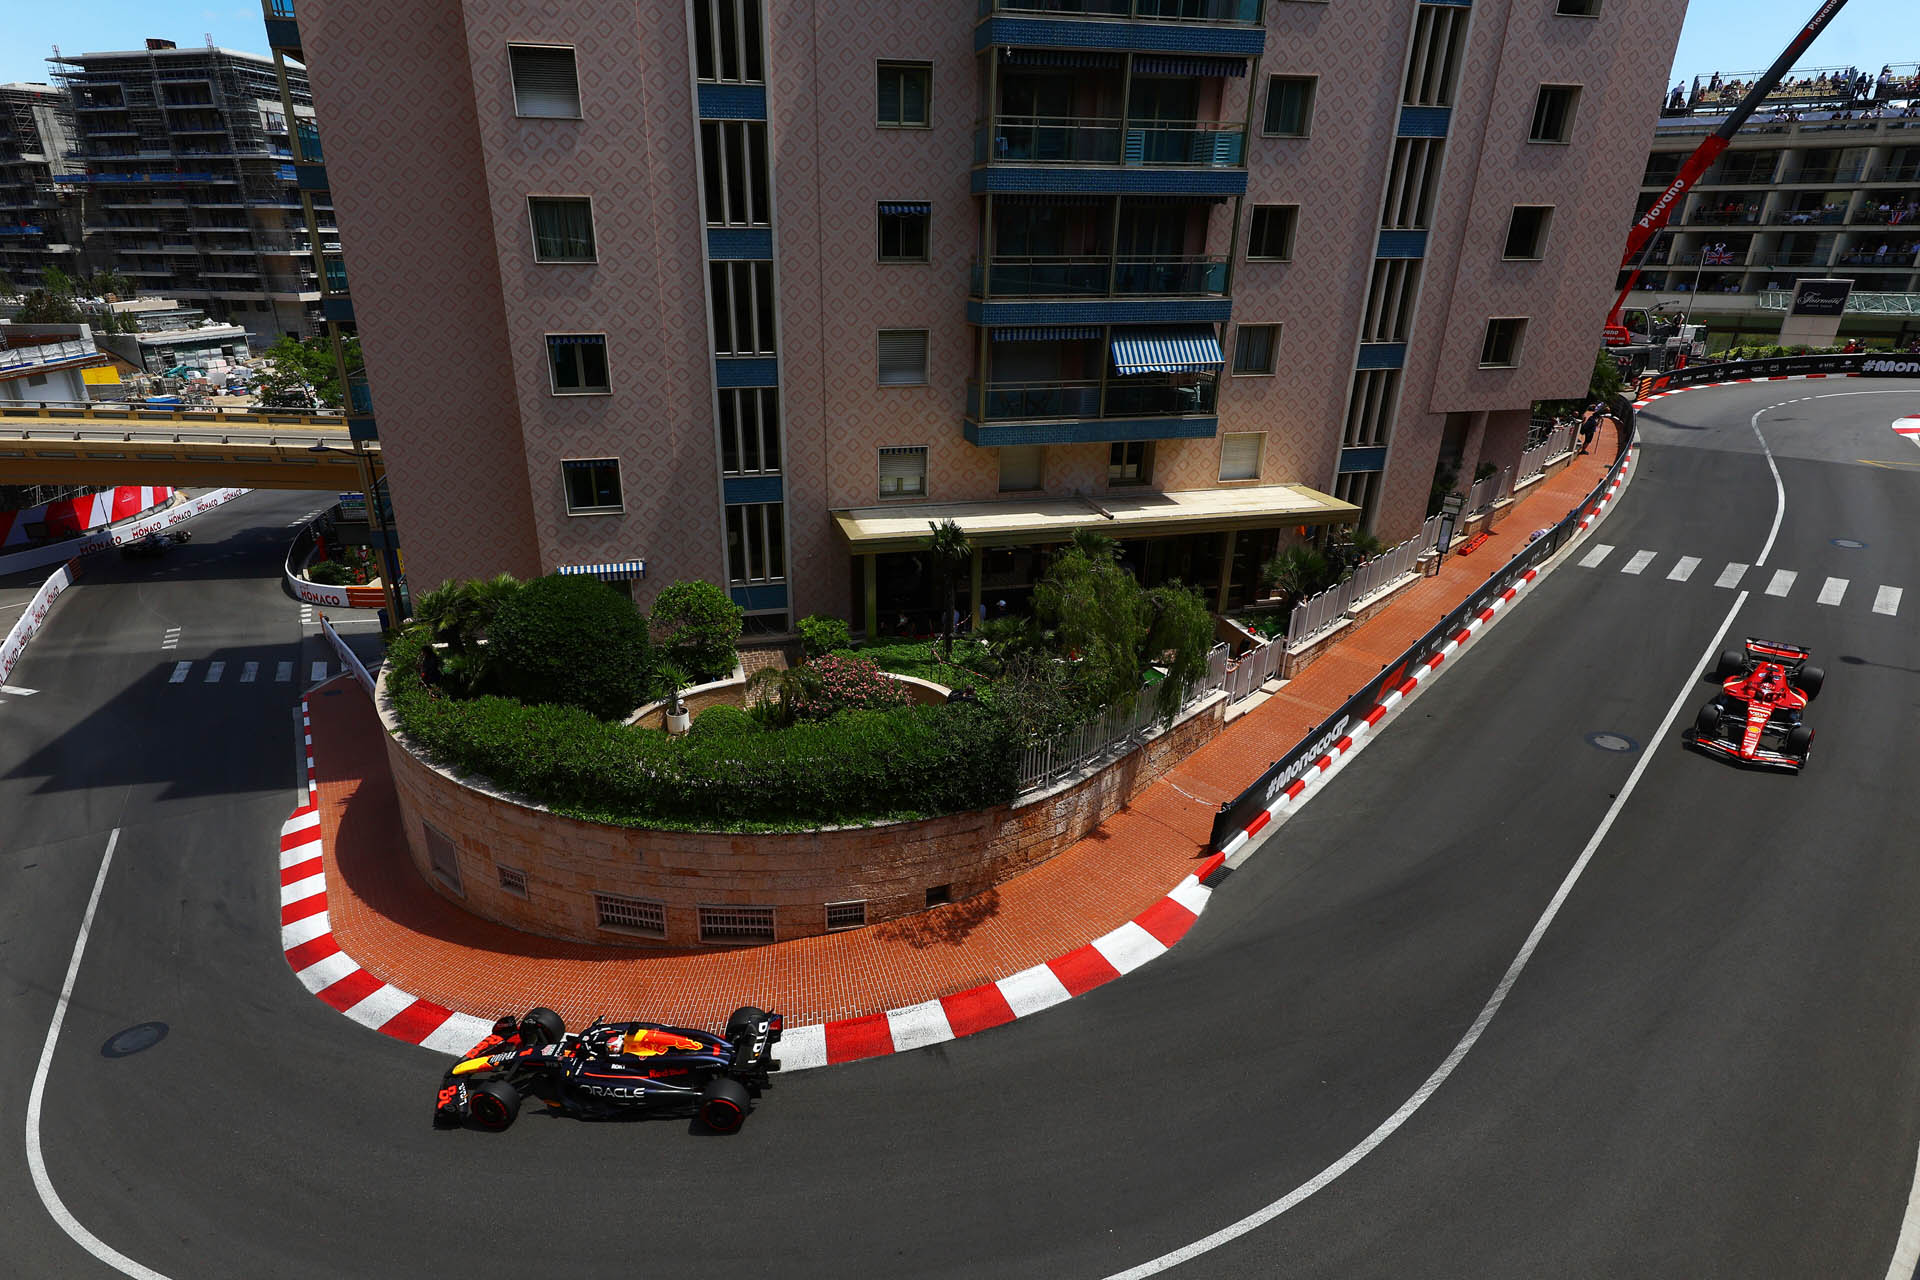 F1 Grand Prix of Monaco Final Practice